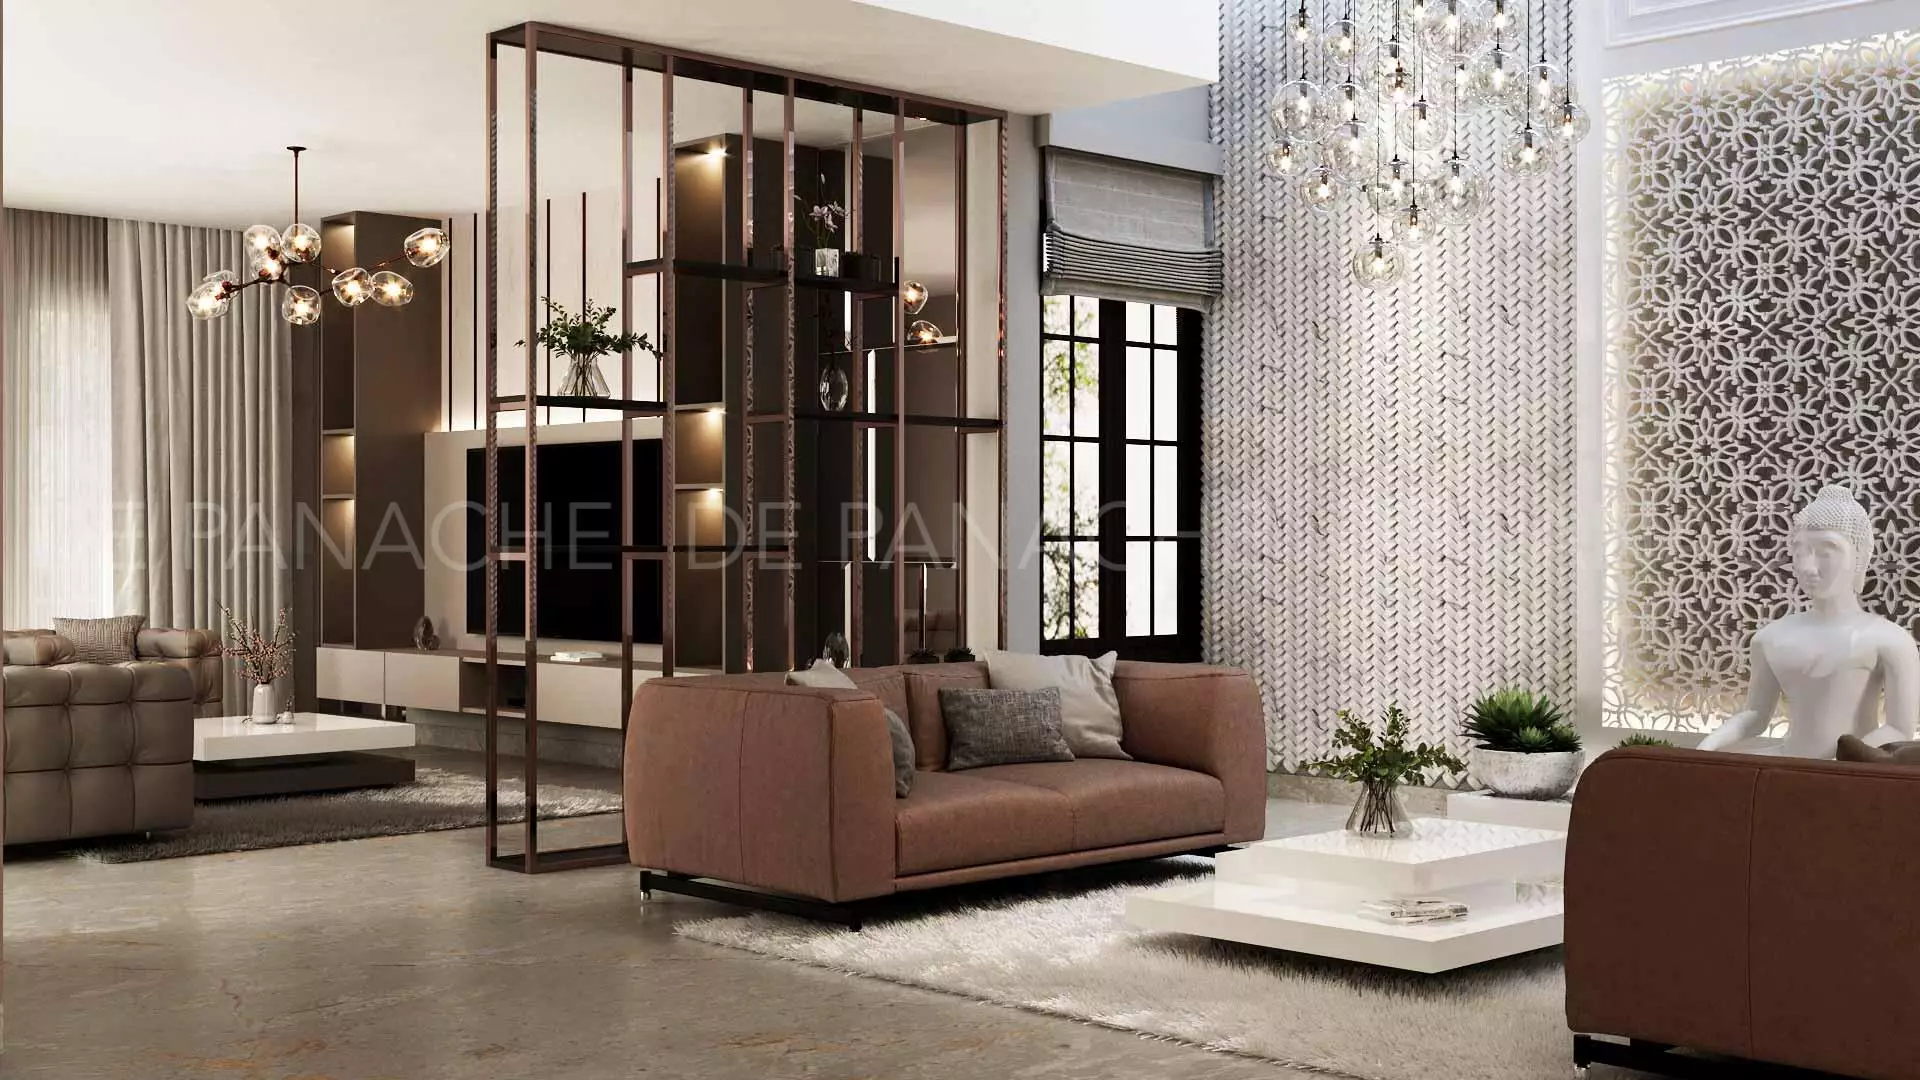 Luxury living area in Bangalore